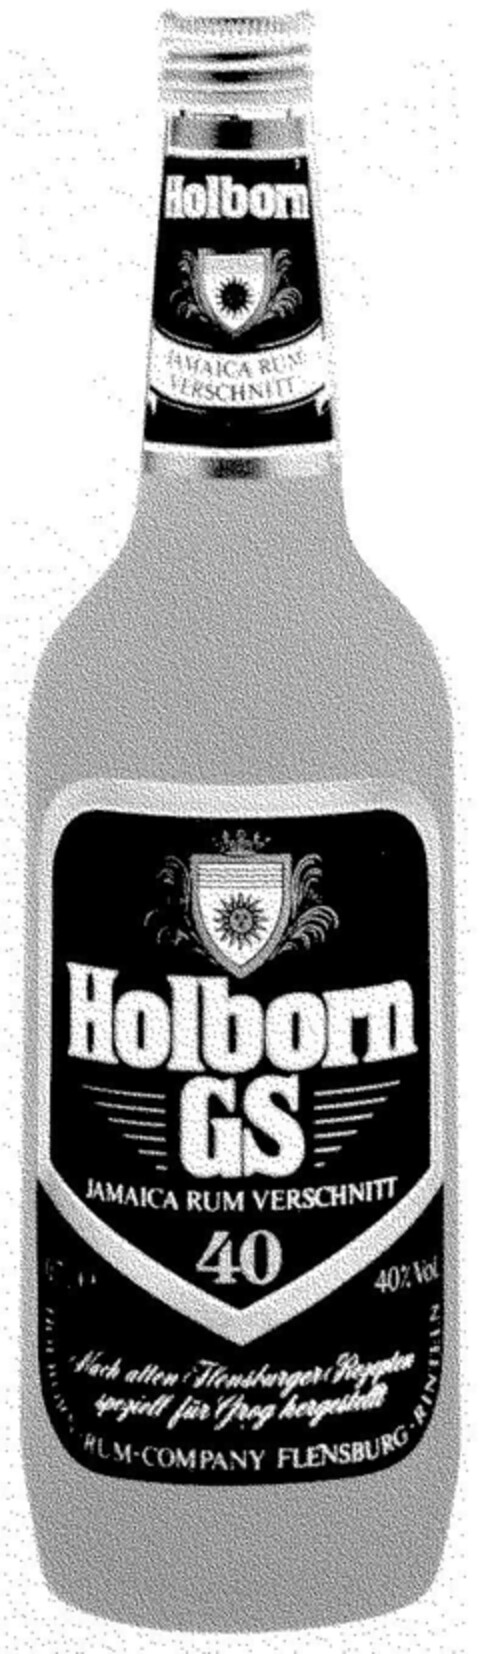 Holborn GS JAMAICA RUM VERSCHNITT 40 Logo (DPMA, 03.10.1985)